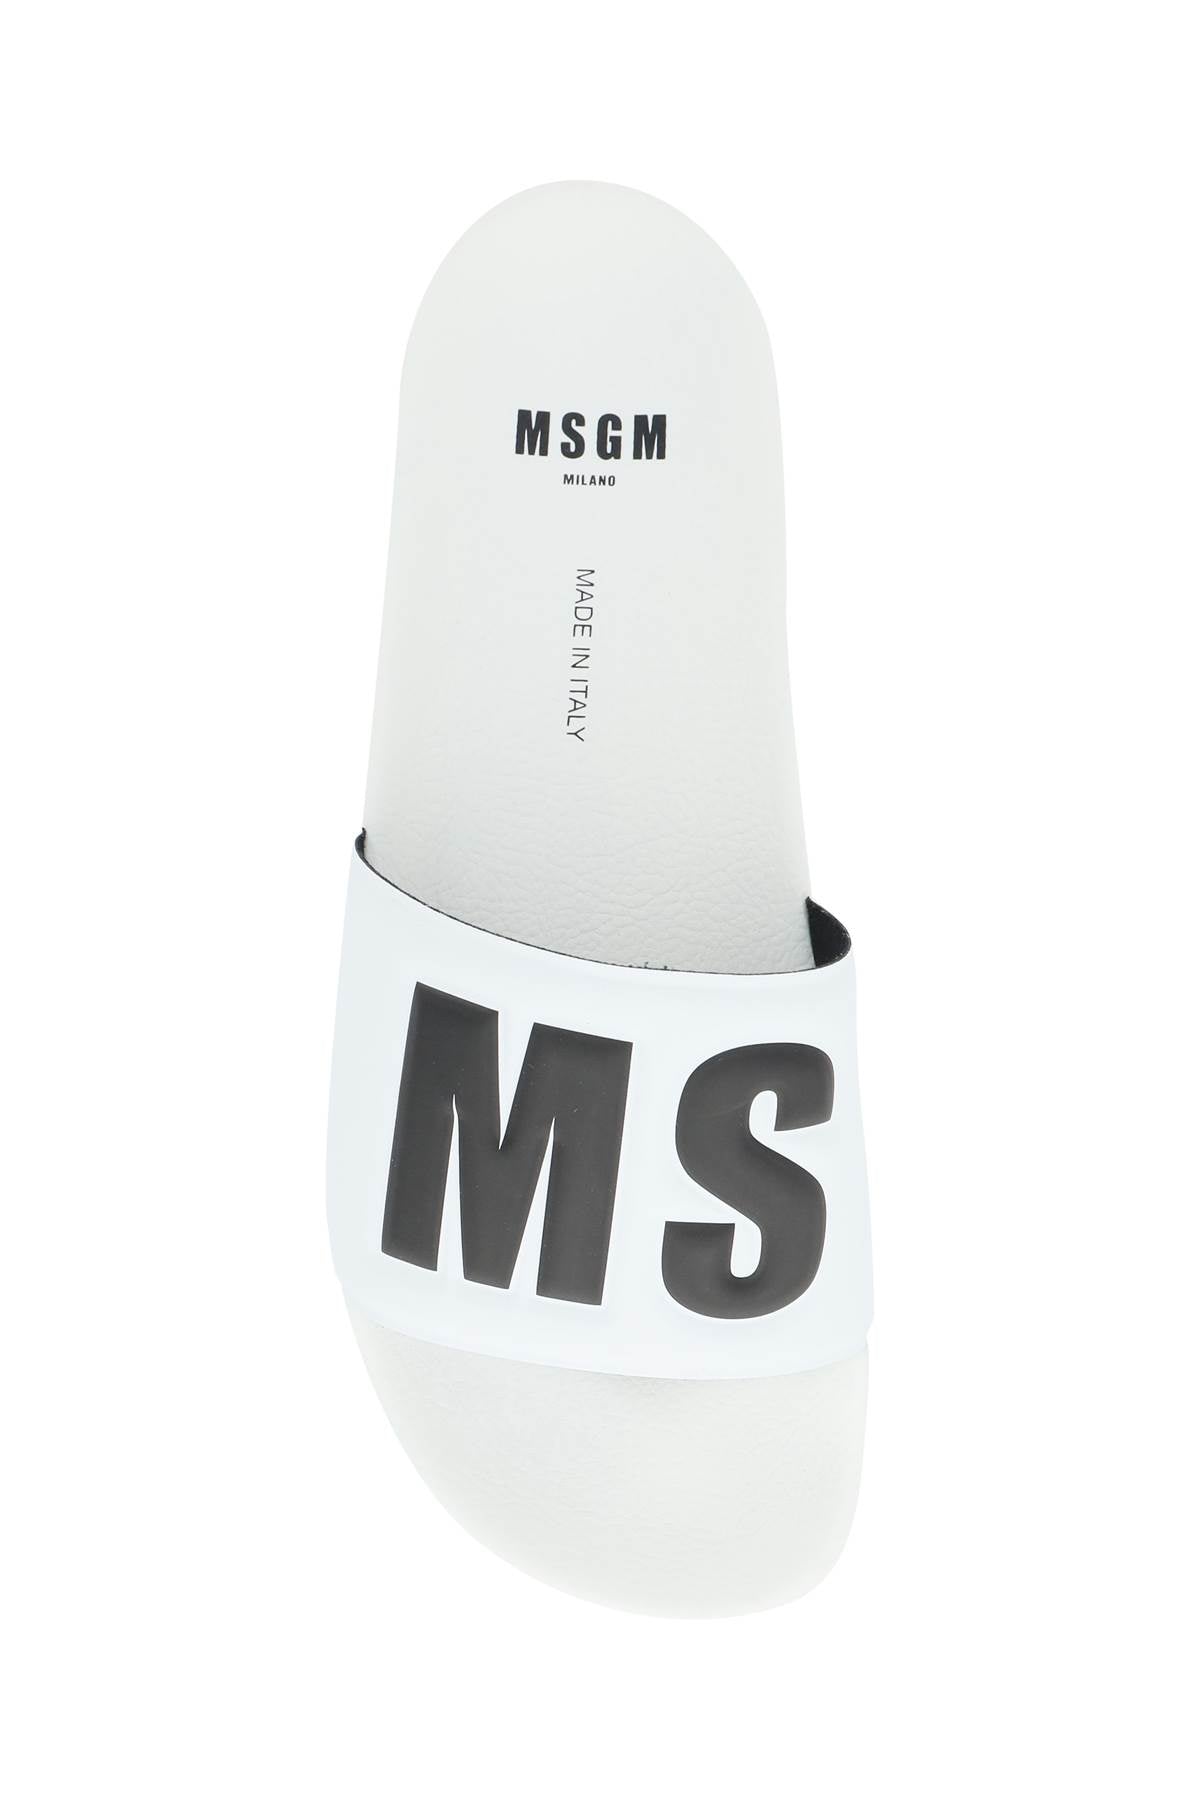 MSGM Msgm logo slides